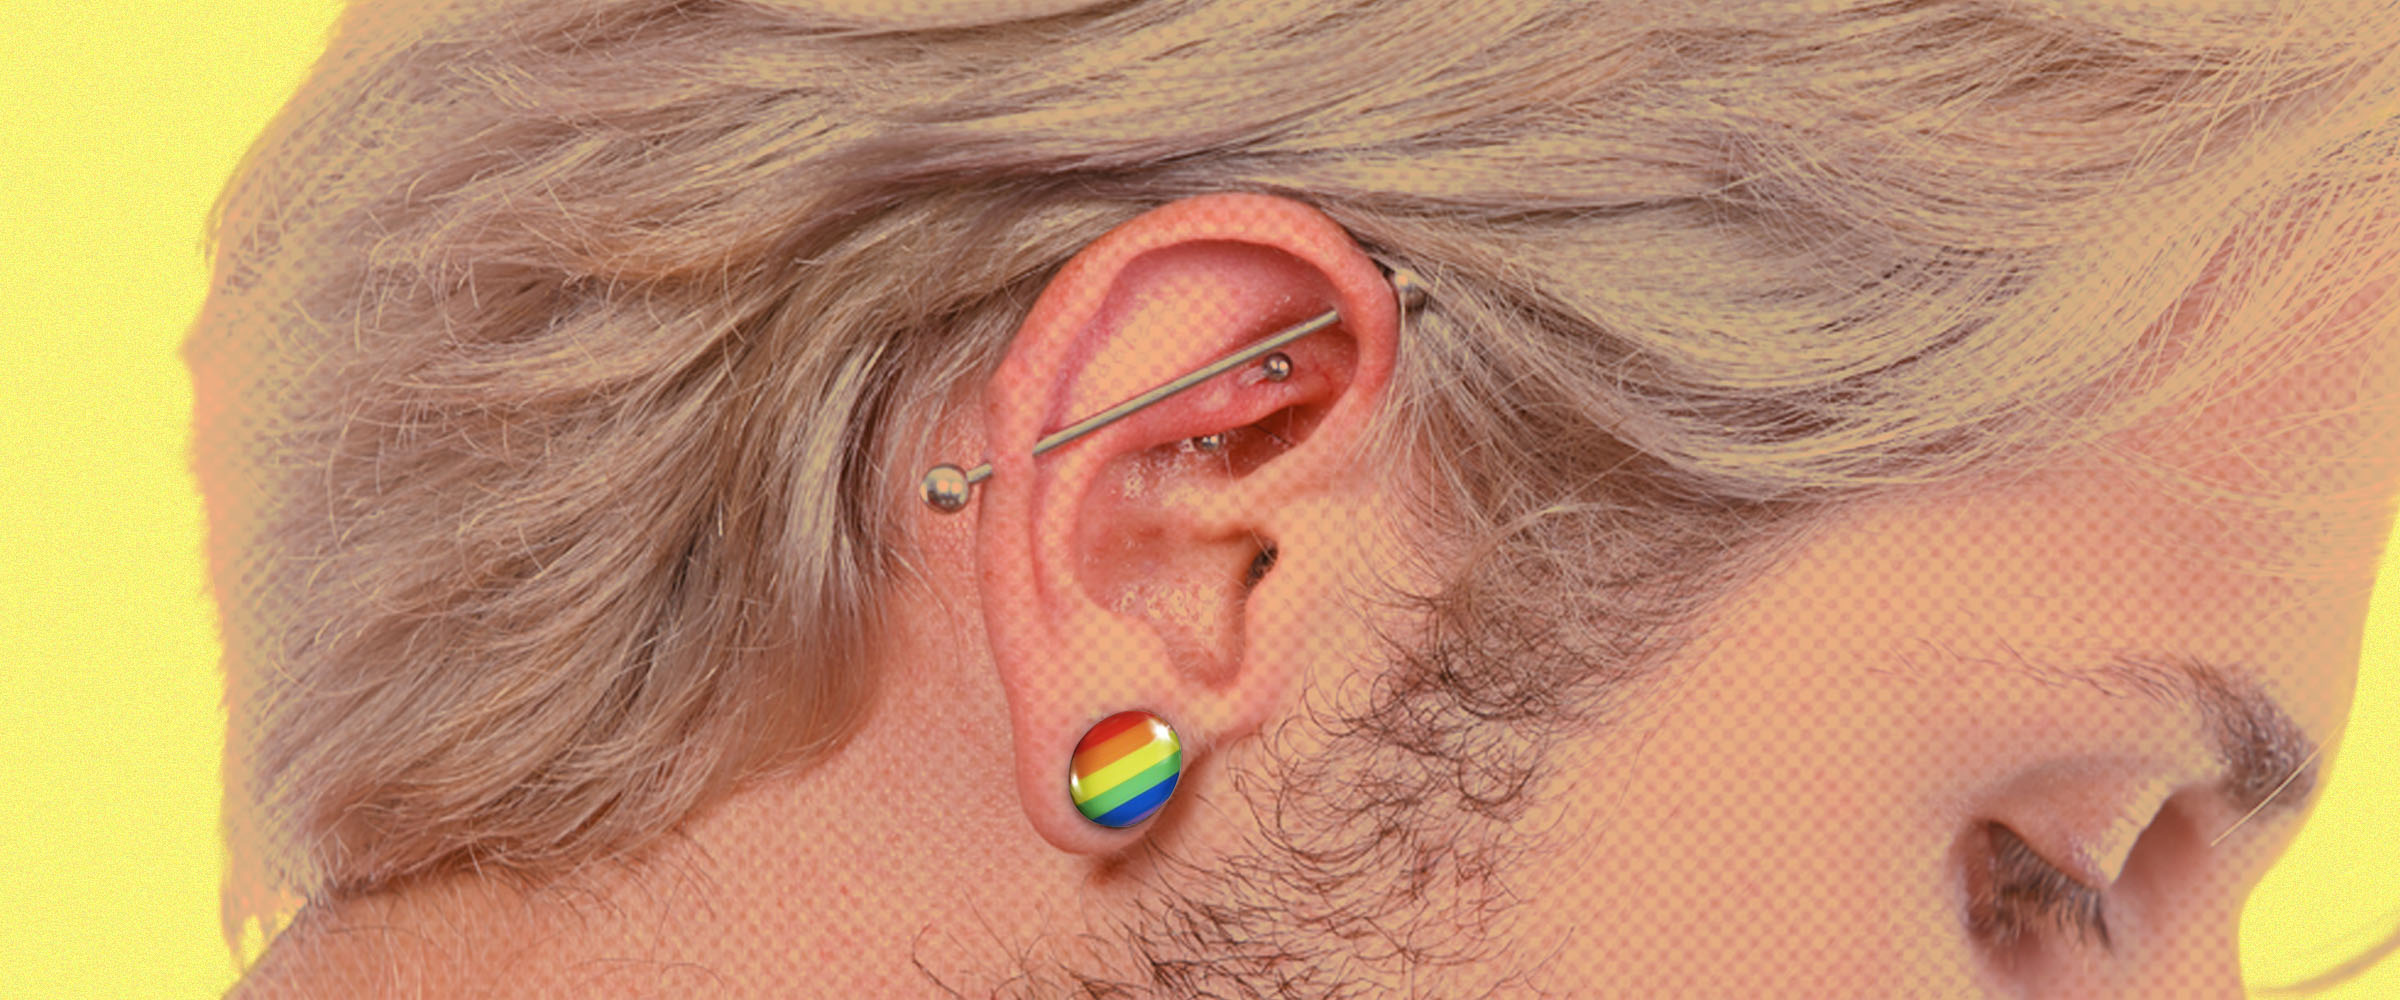 What side does a gay man wear an earring